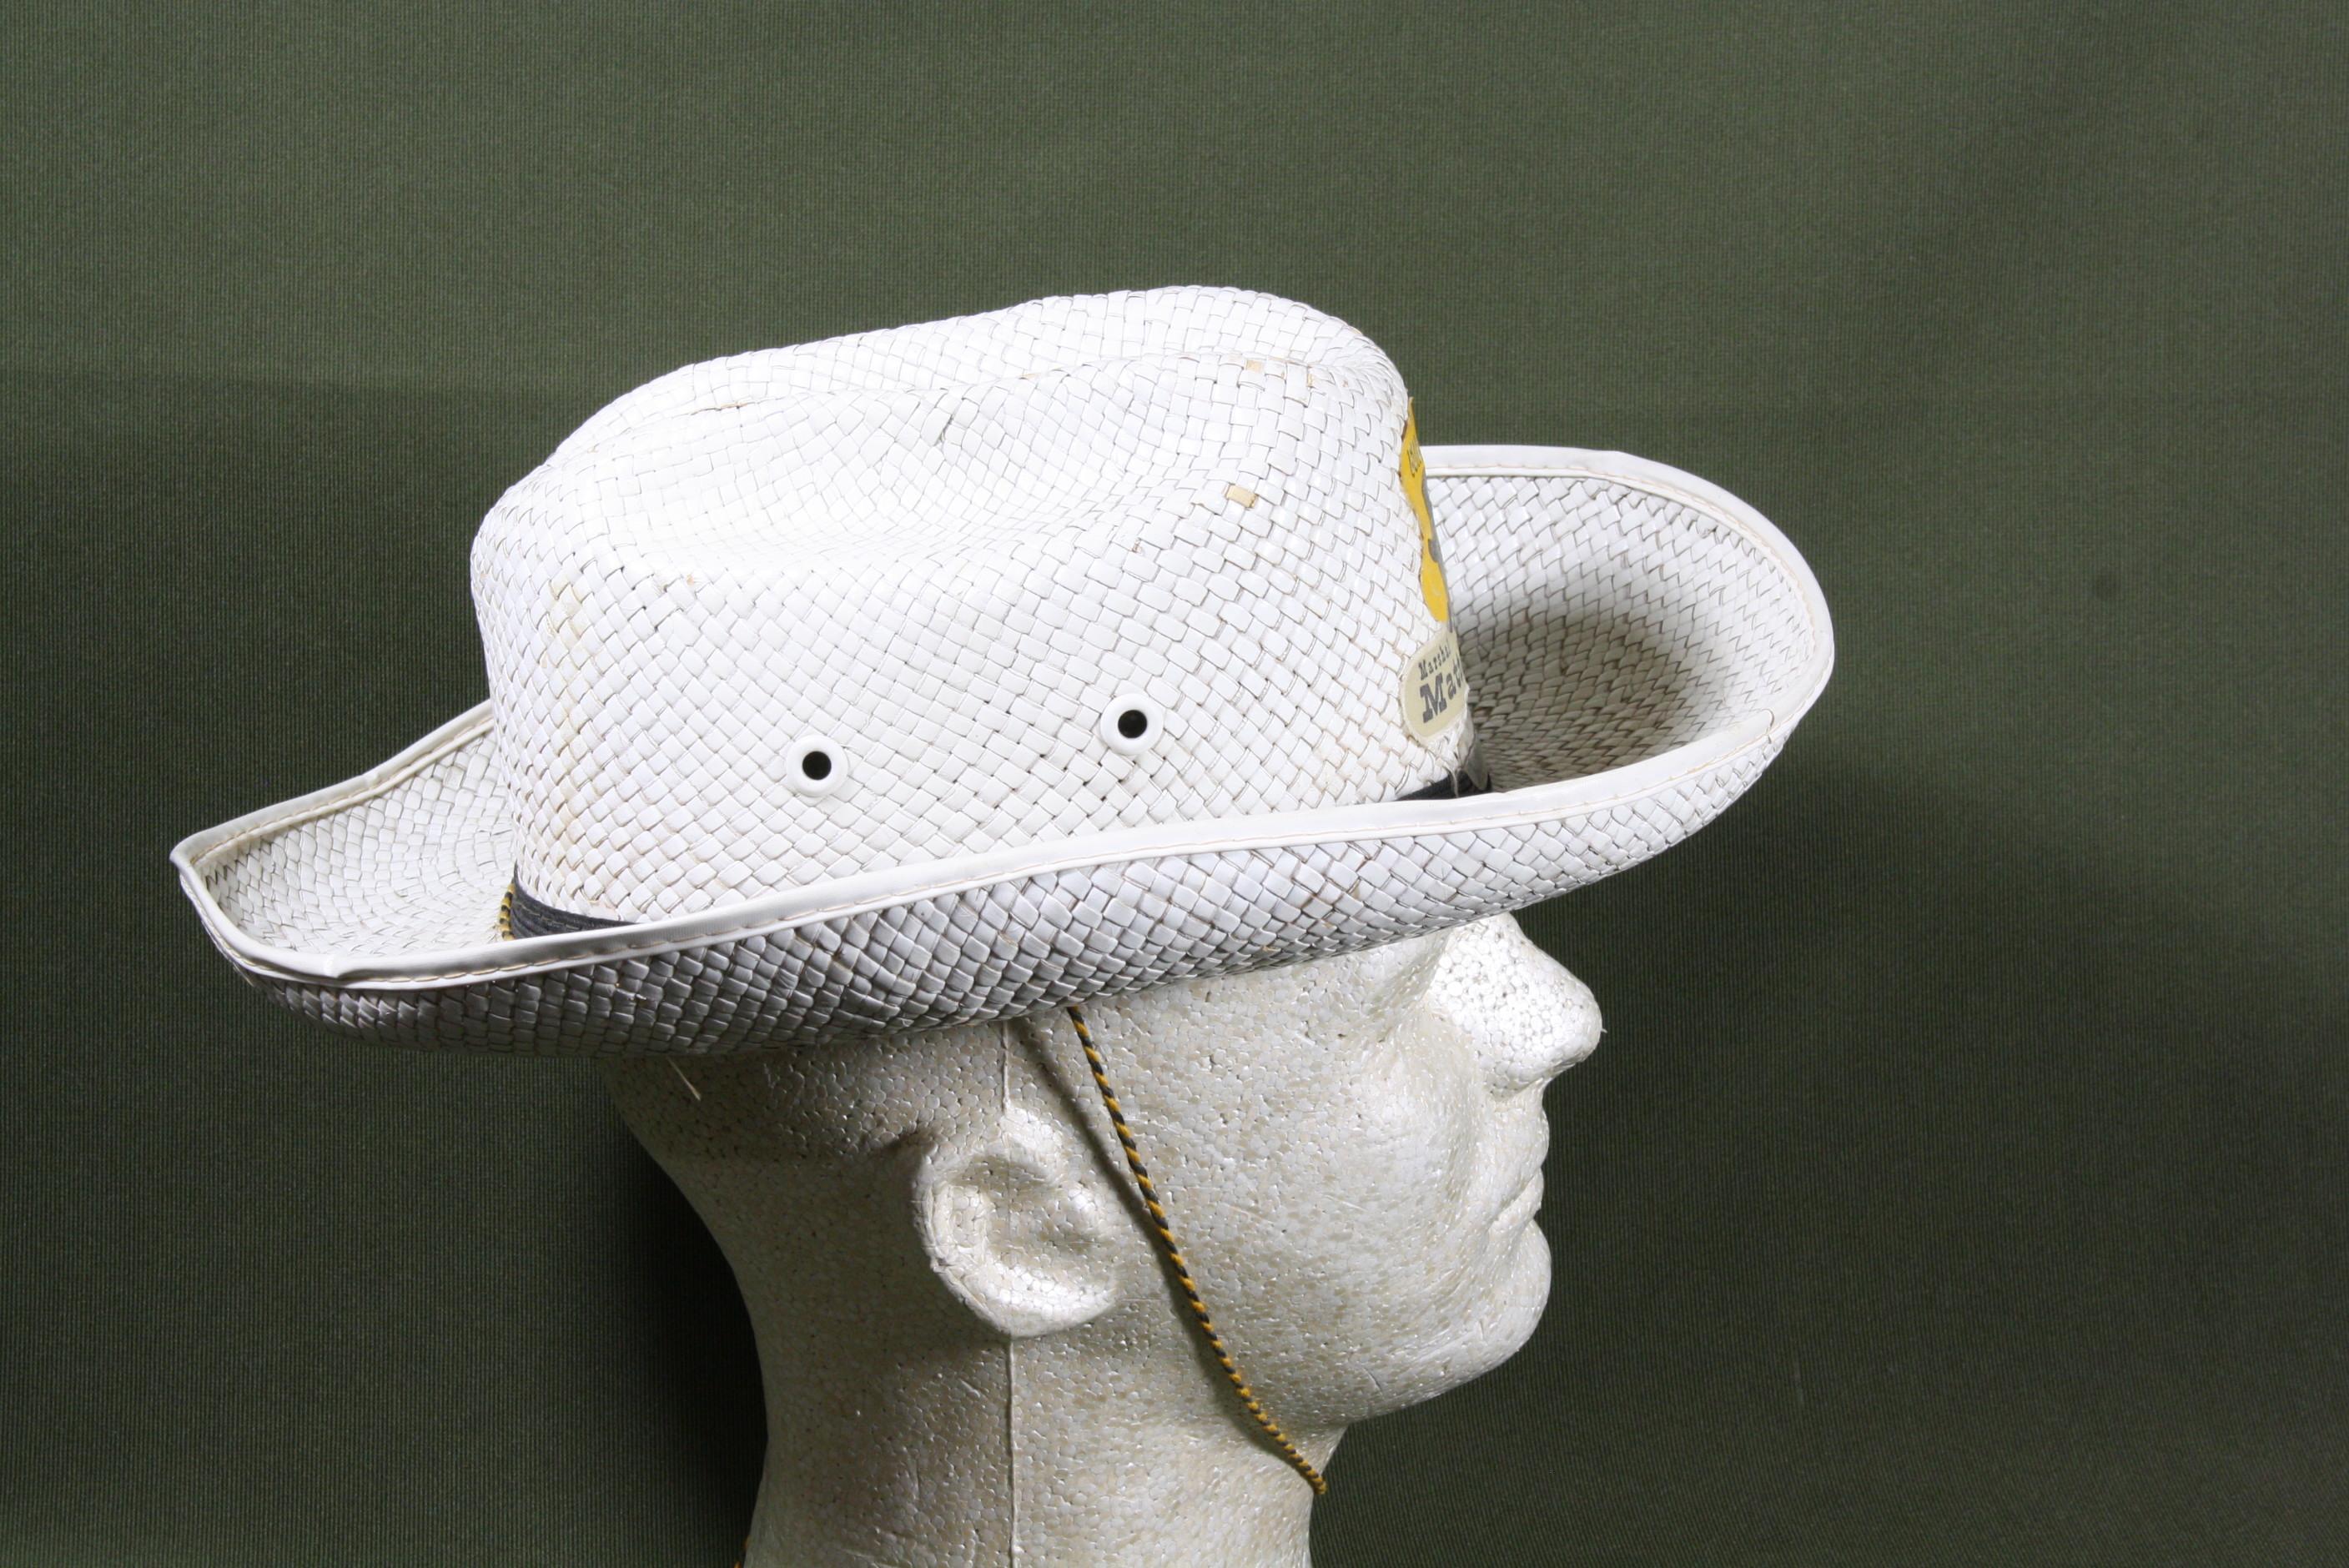 Circa 1960 “Gunsmoke – Matt Dillon” cowboy hat